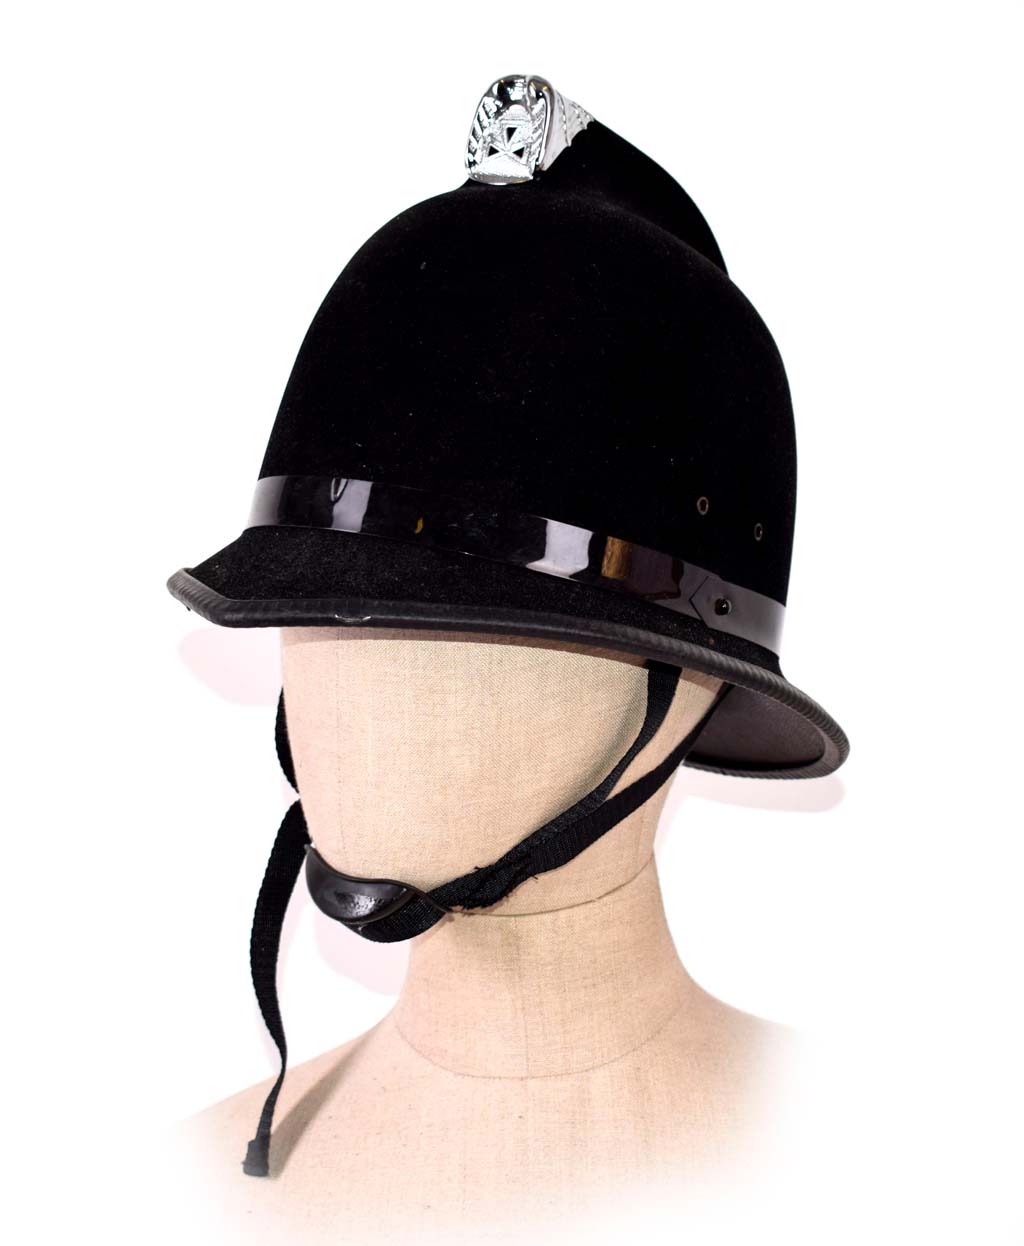 Шлем полицейский для знака на закрутке б/у Англия